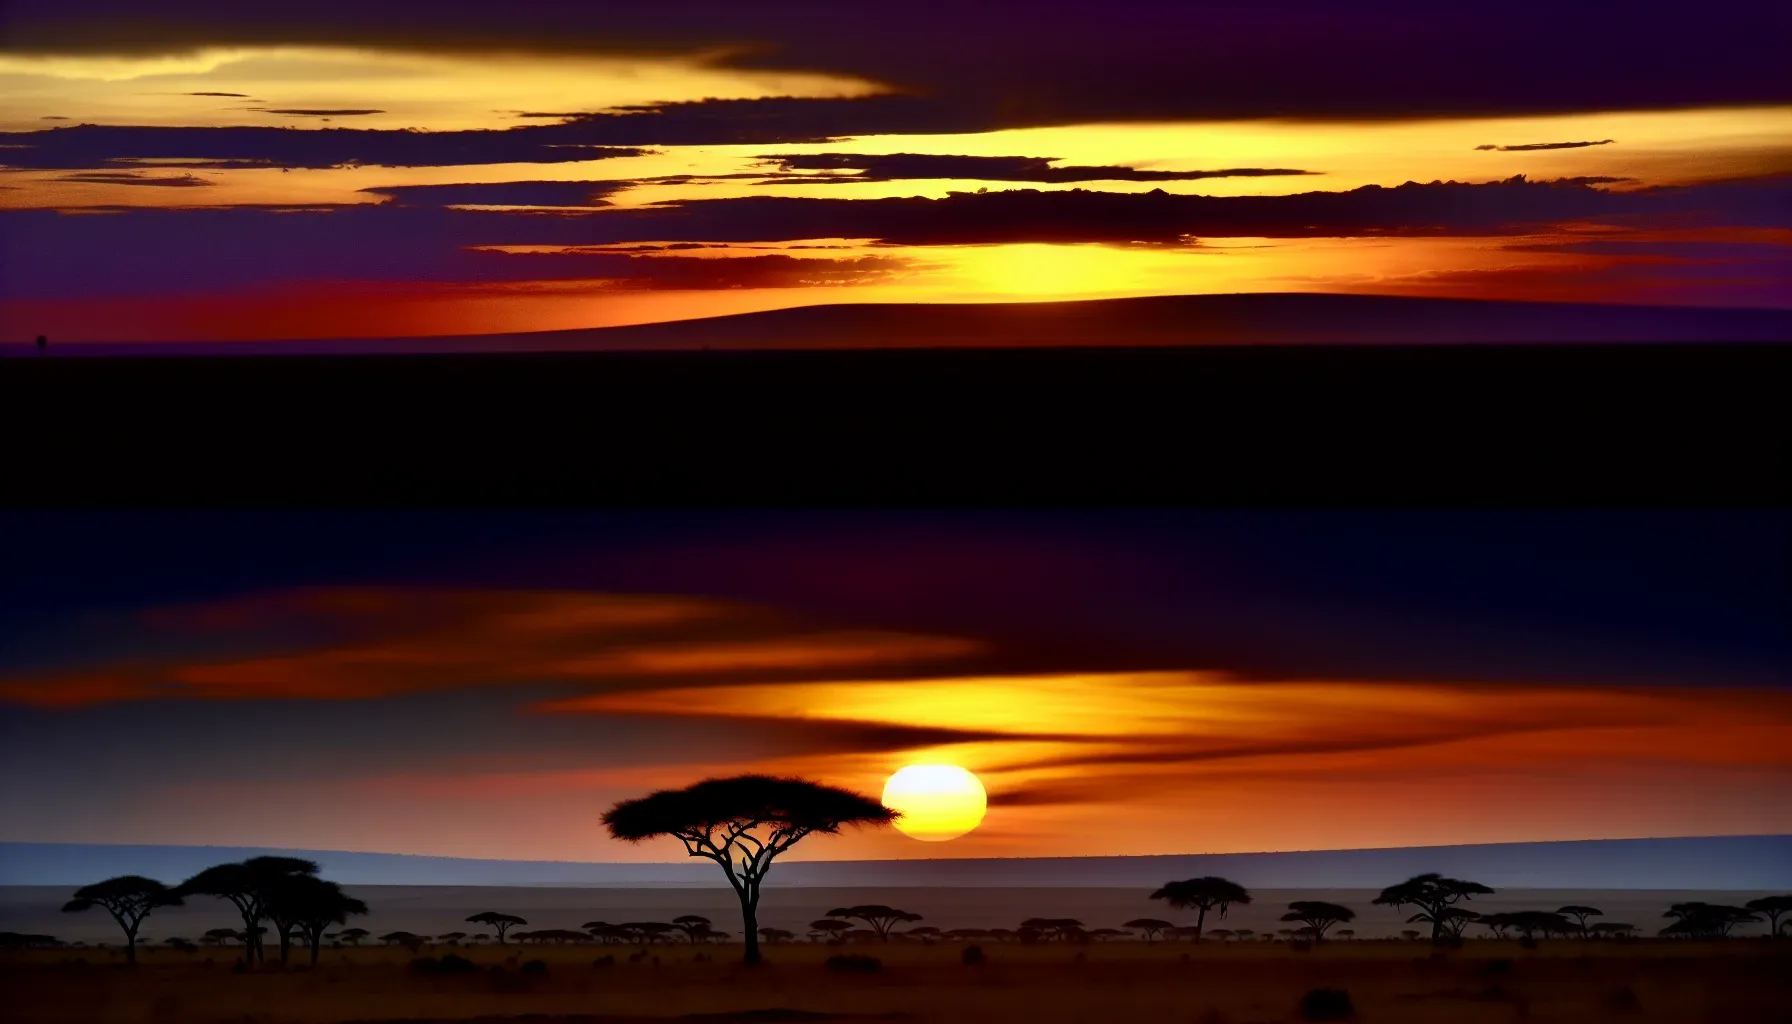 Stunning sunset views over the Serengeti National Park